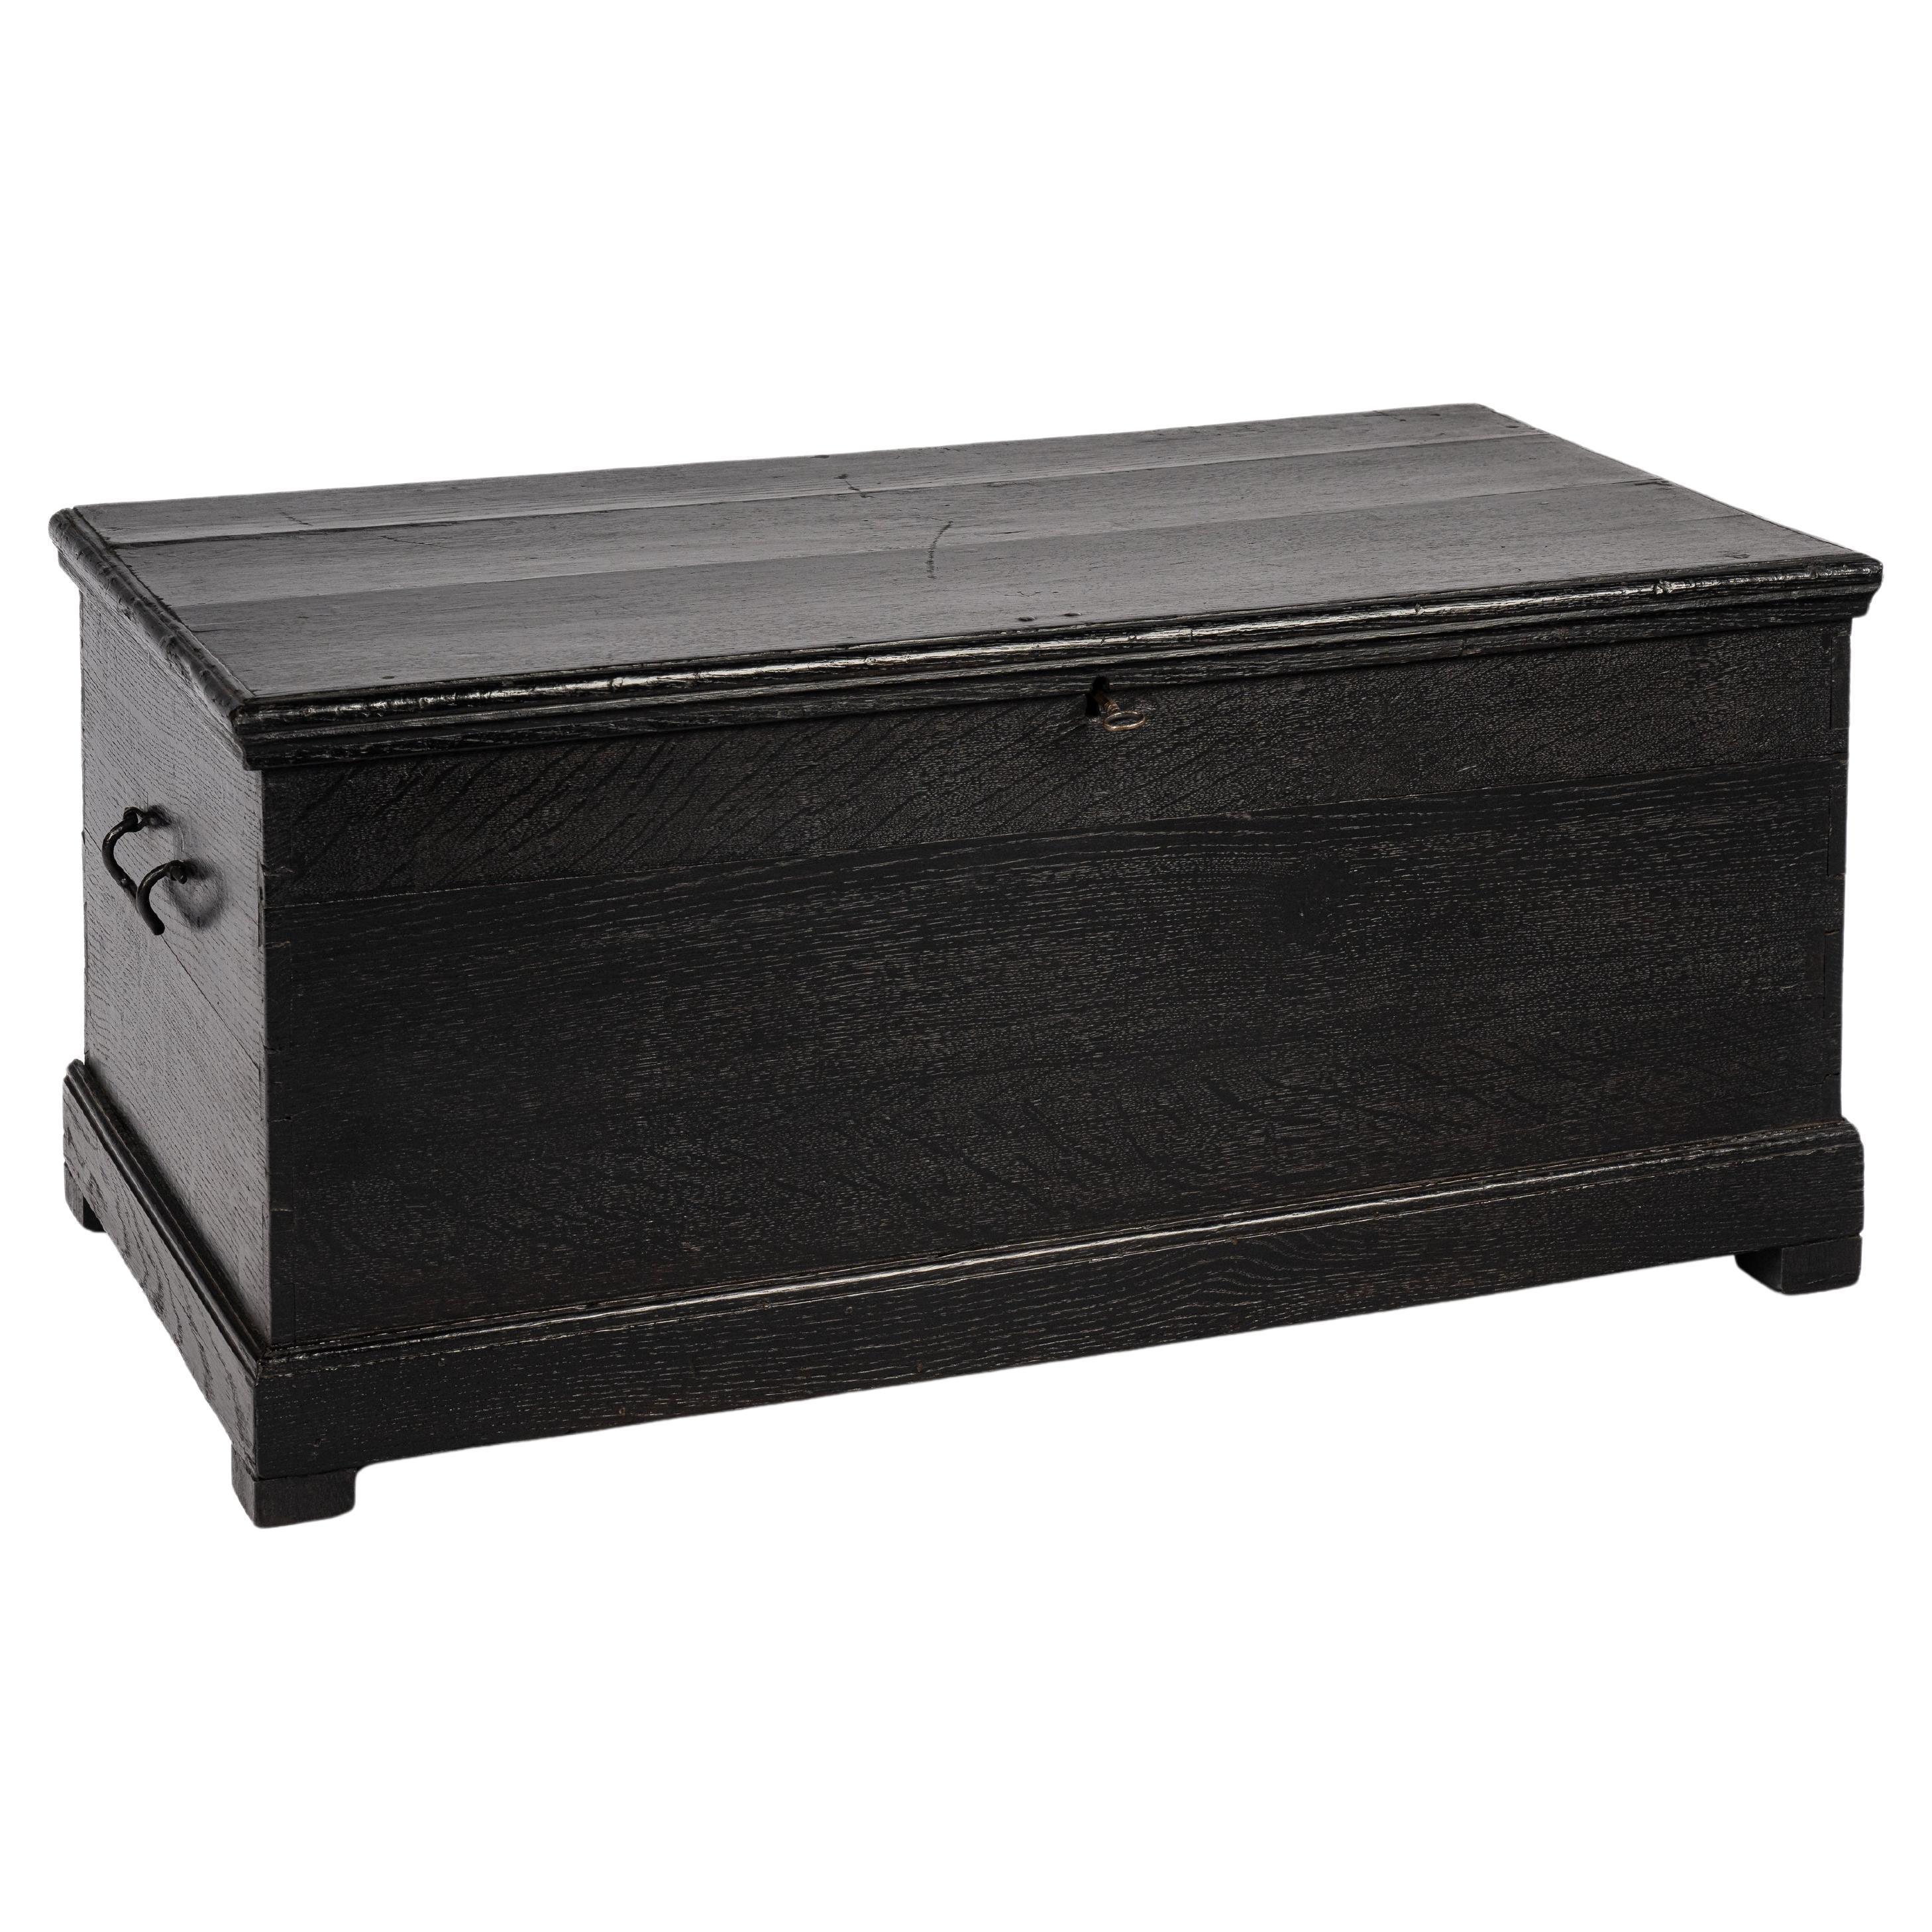 Antique 19th-century West German black oak blanket chest trunk or coffer For Sale